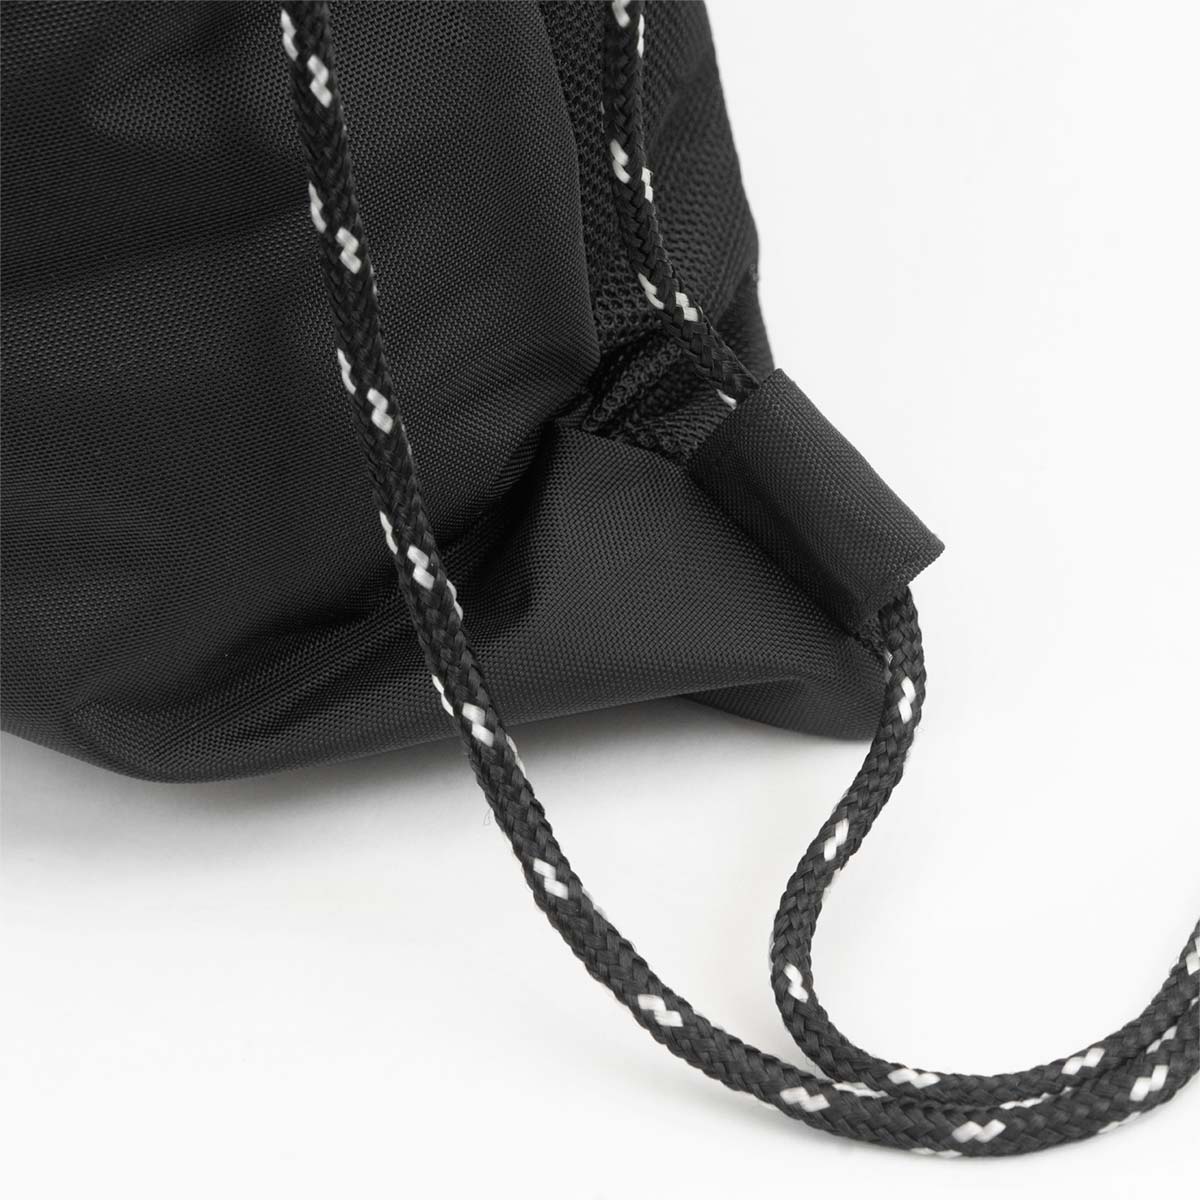 Nylon Drawstring Bag in Black image number 4